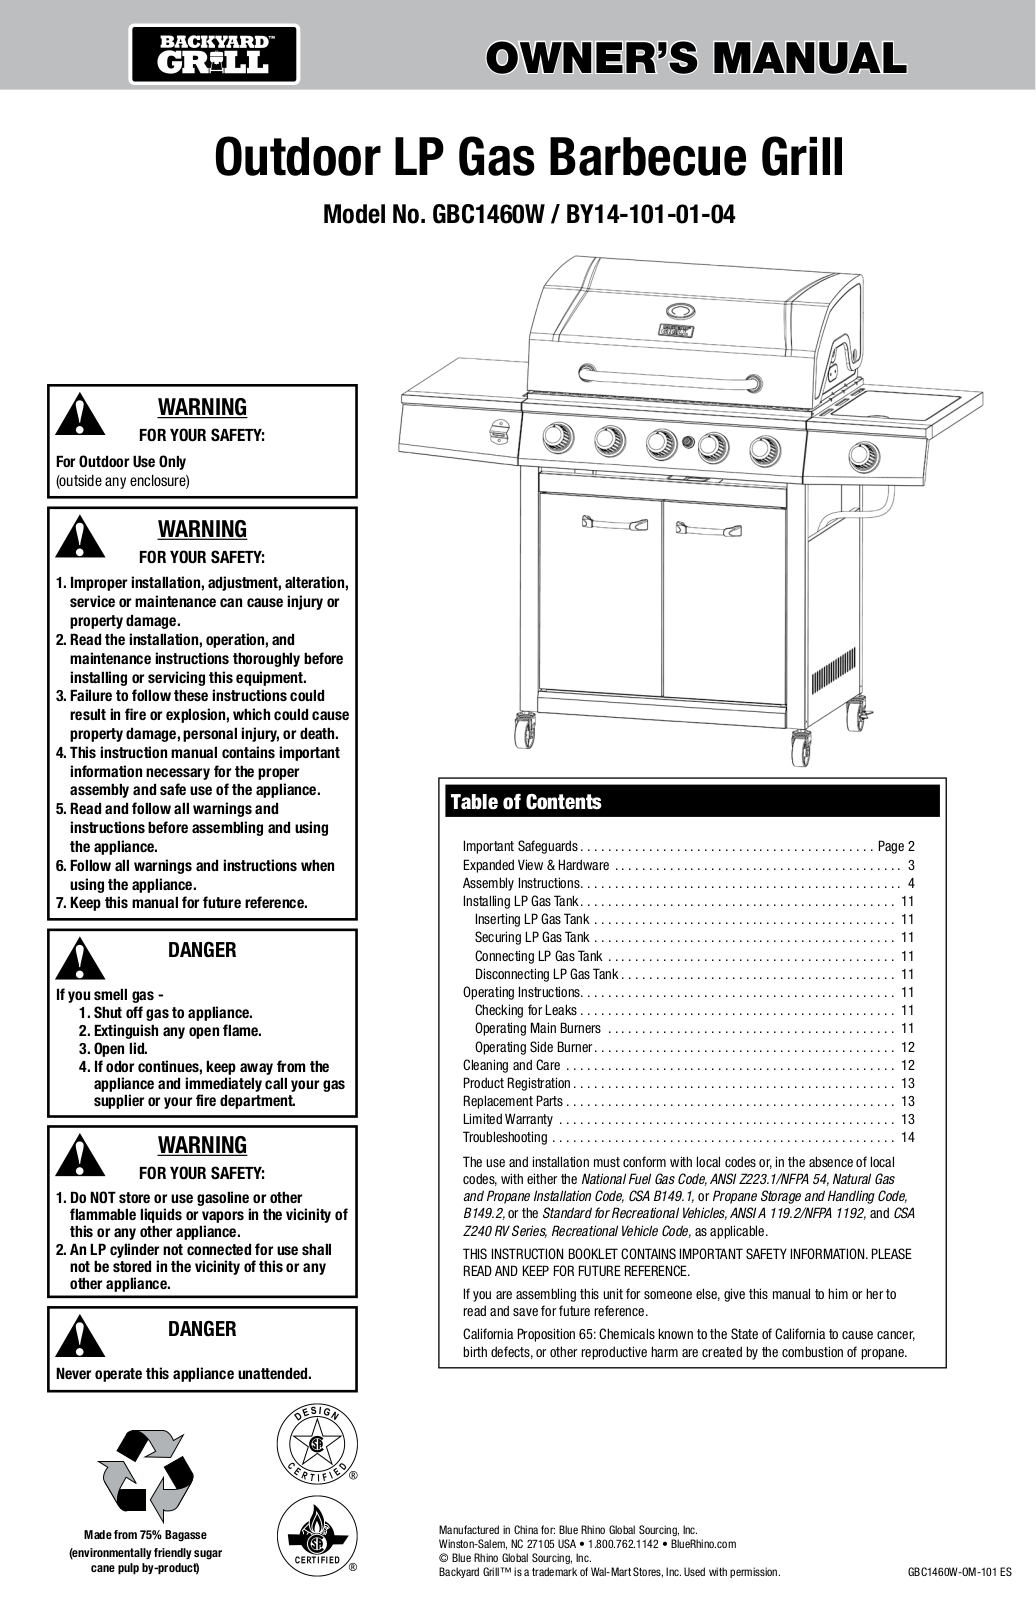 Backyard Grill GBC1460W, BY14-101-01-04 User Manual